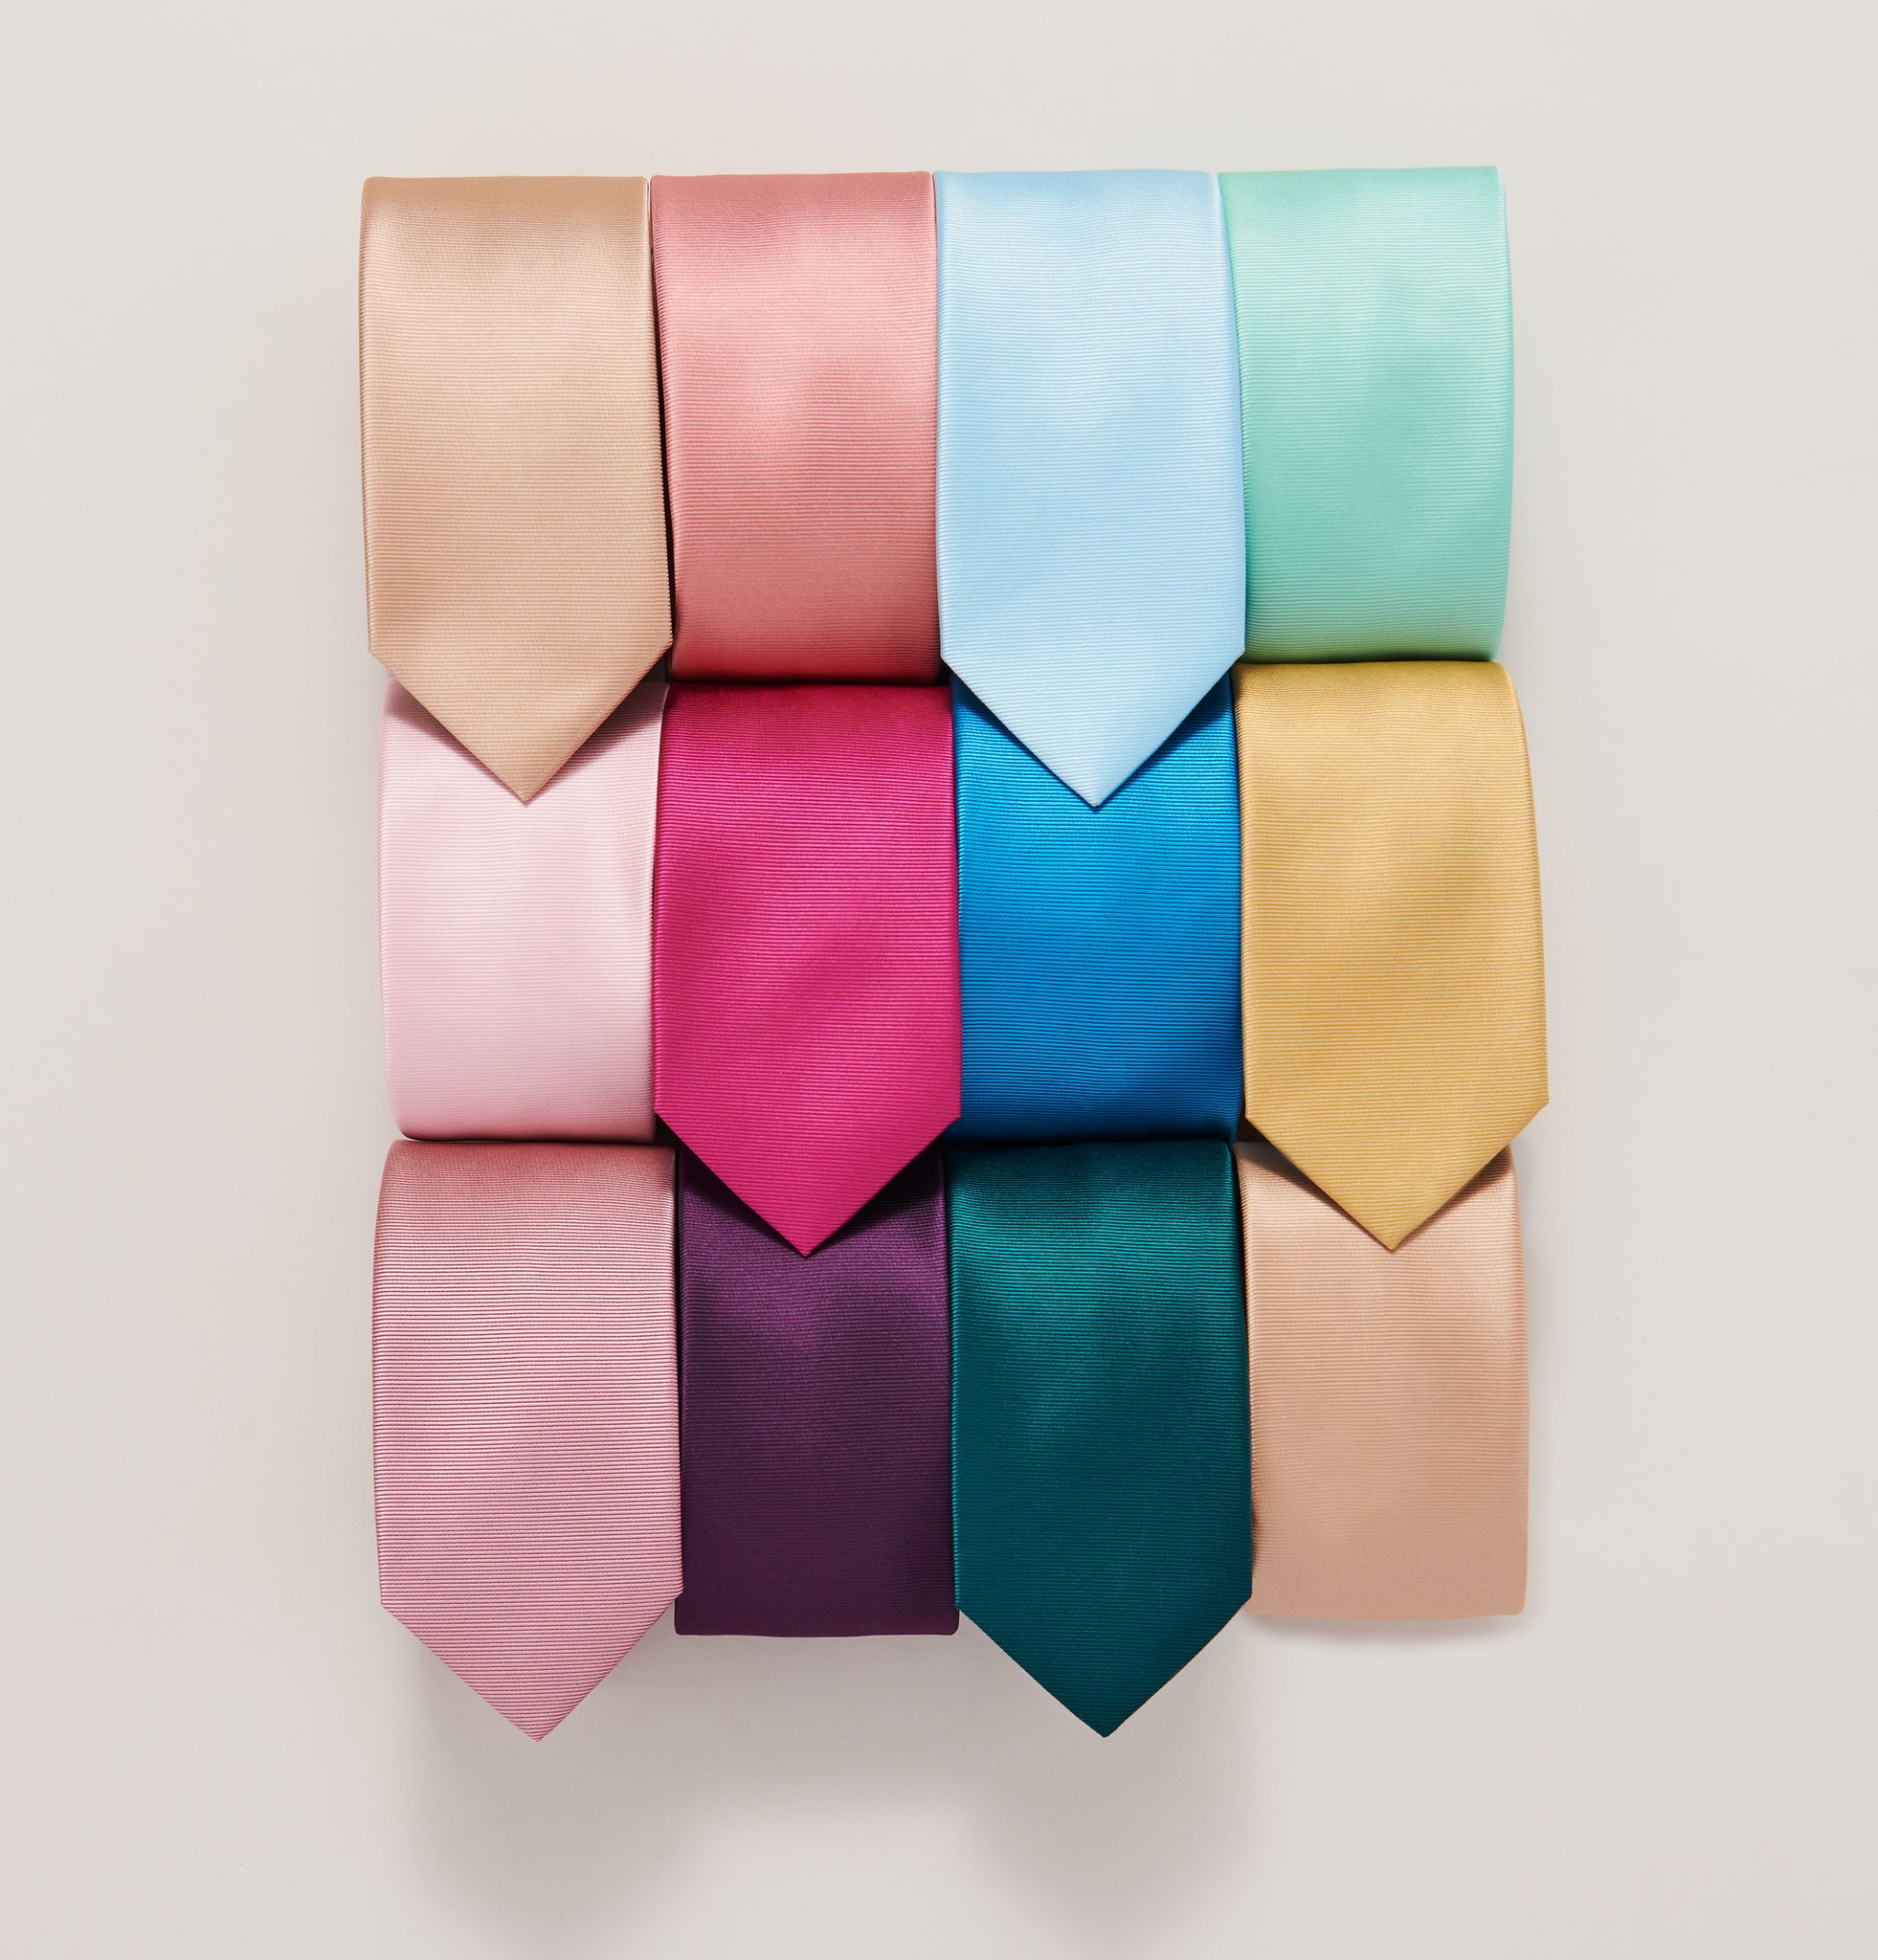 Wedding Bowties, Knit Ties, Silk Ties: What Tie Should You Tie The Knot In?